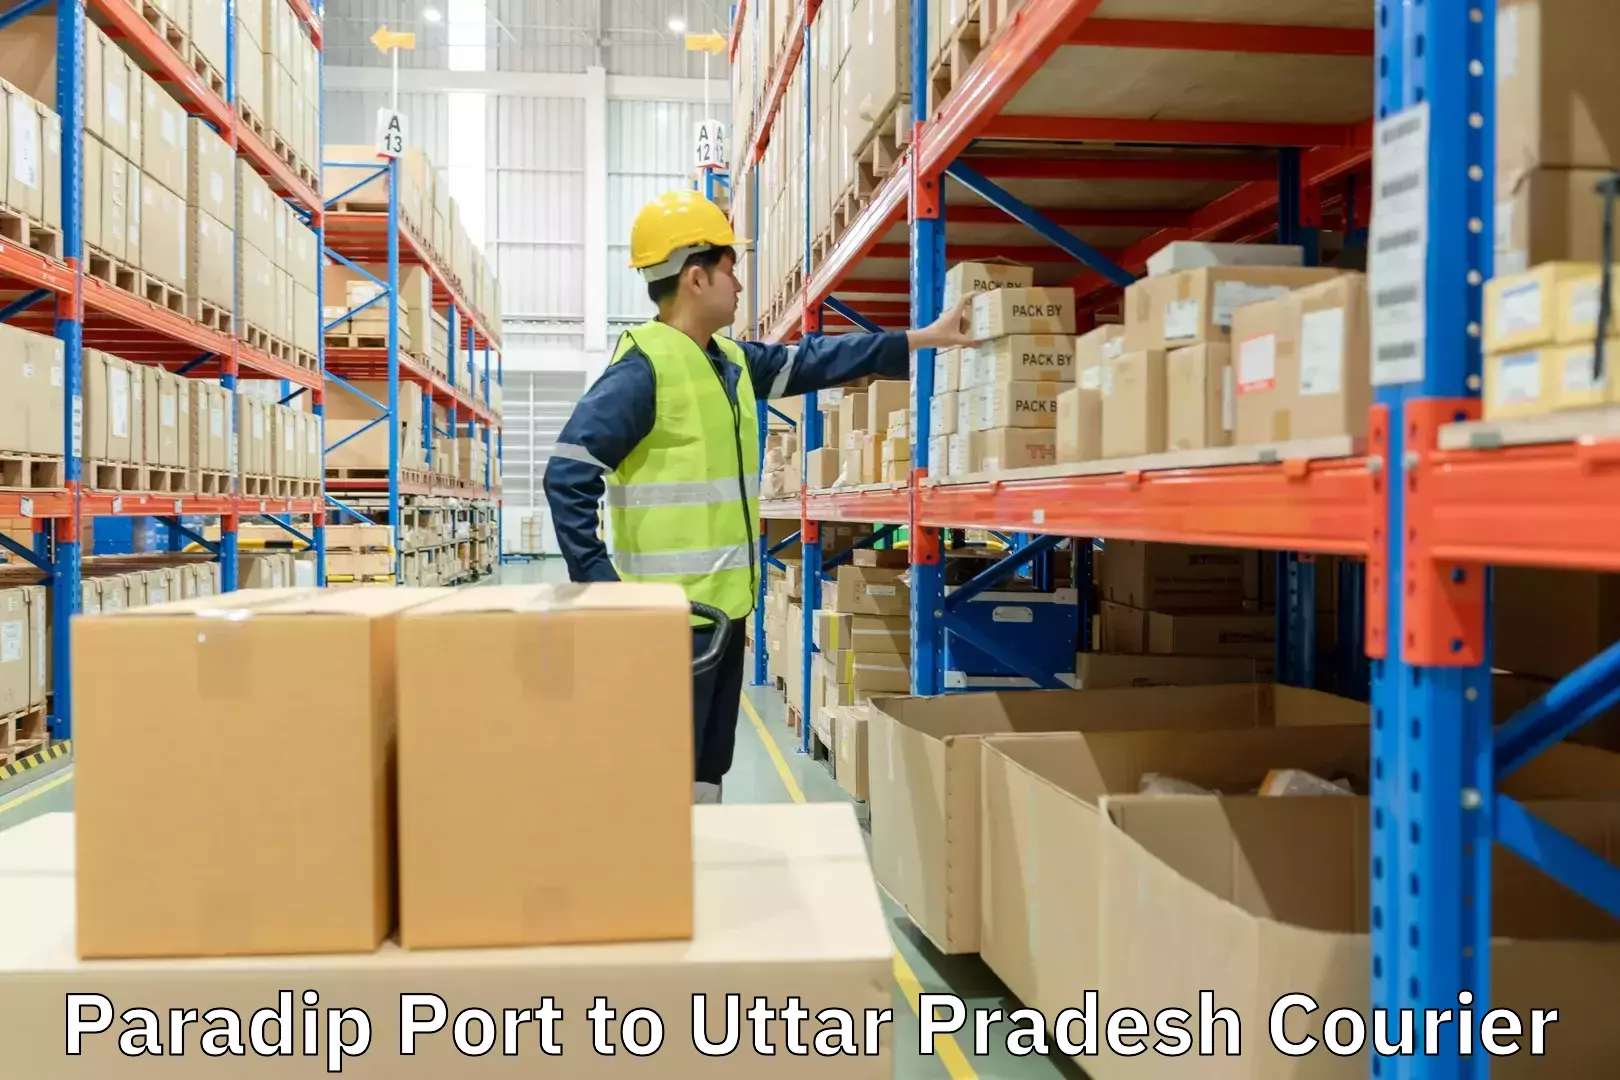 Overnight delivery services Paradip Port to Uttar Pradesh